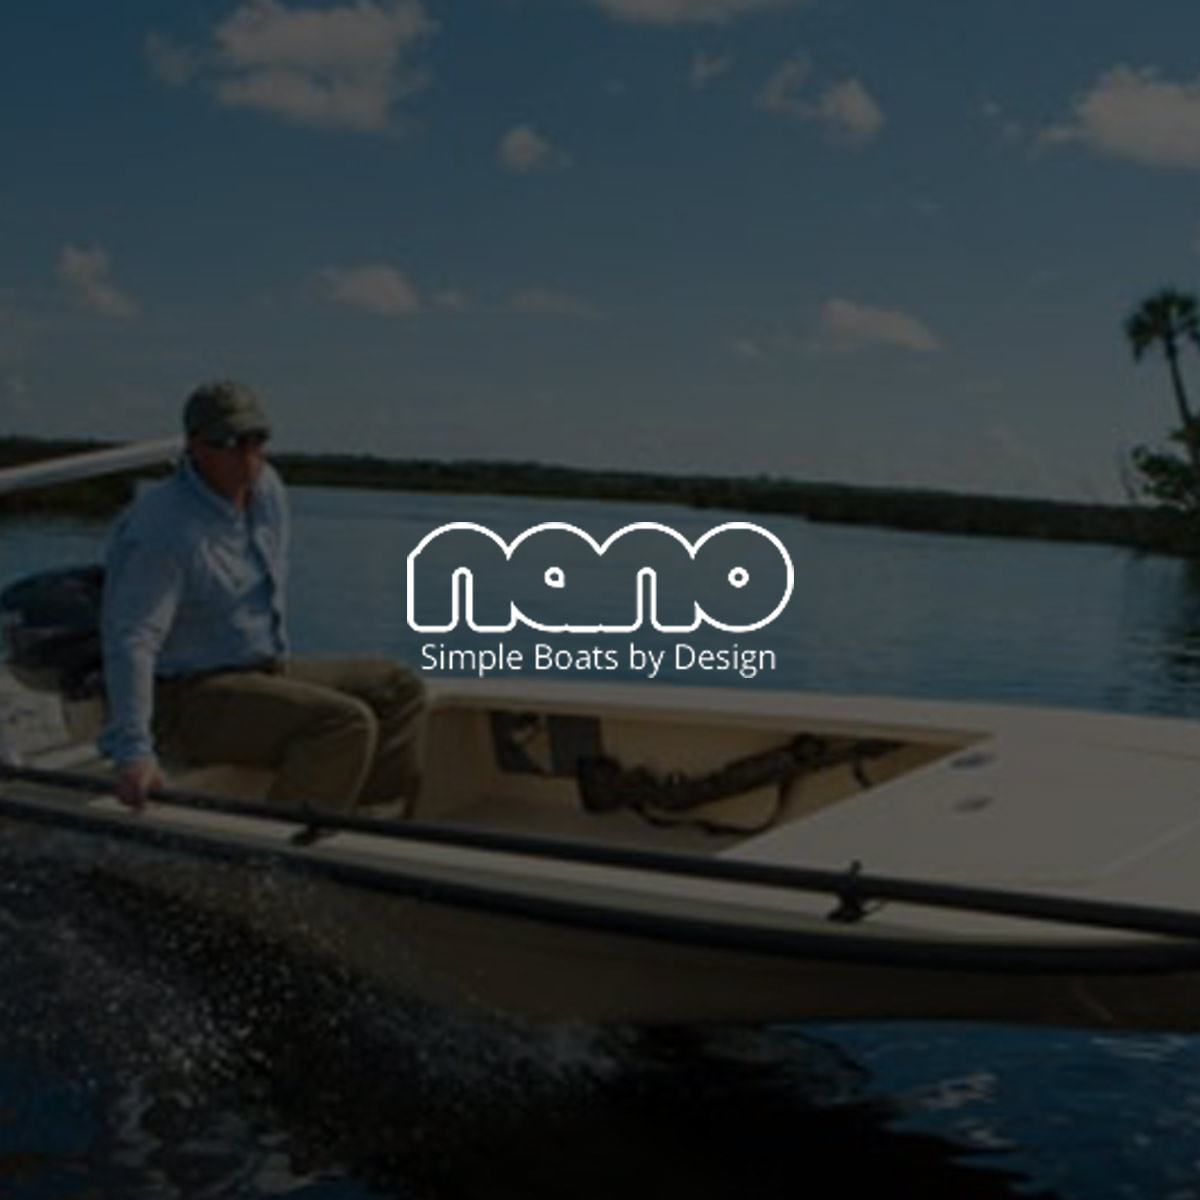 Boat company website design